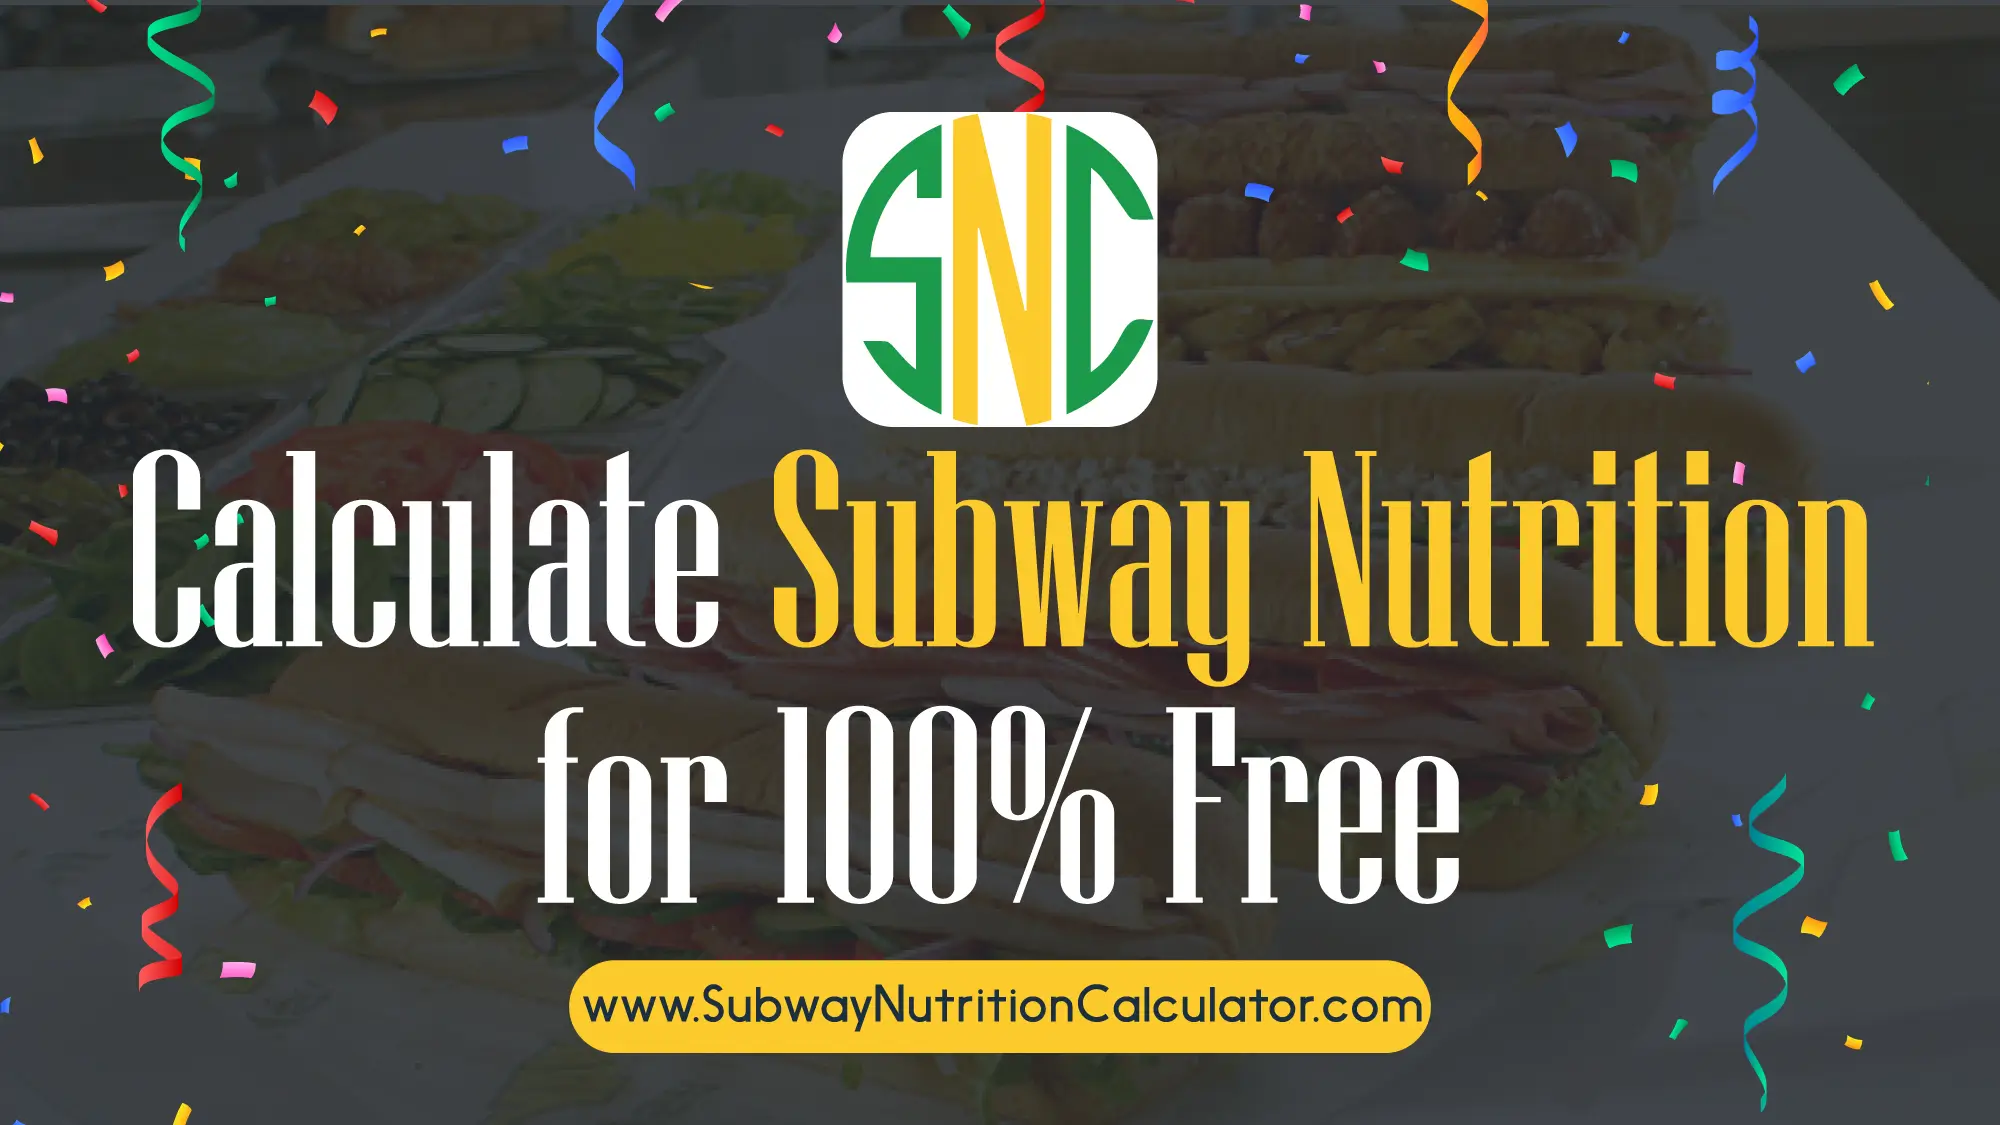 Subway Nutrition Calculator | subway calorie calculator